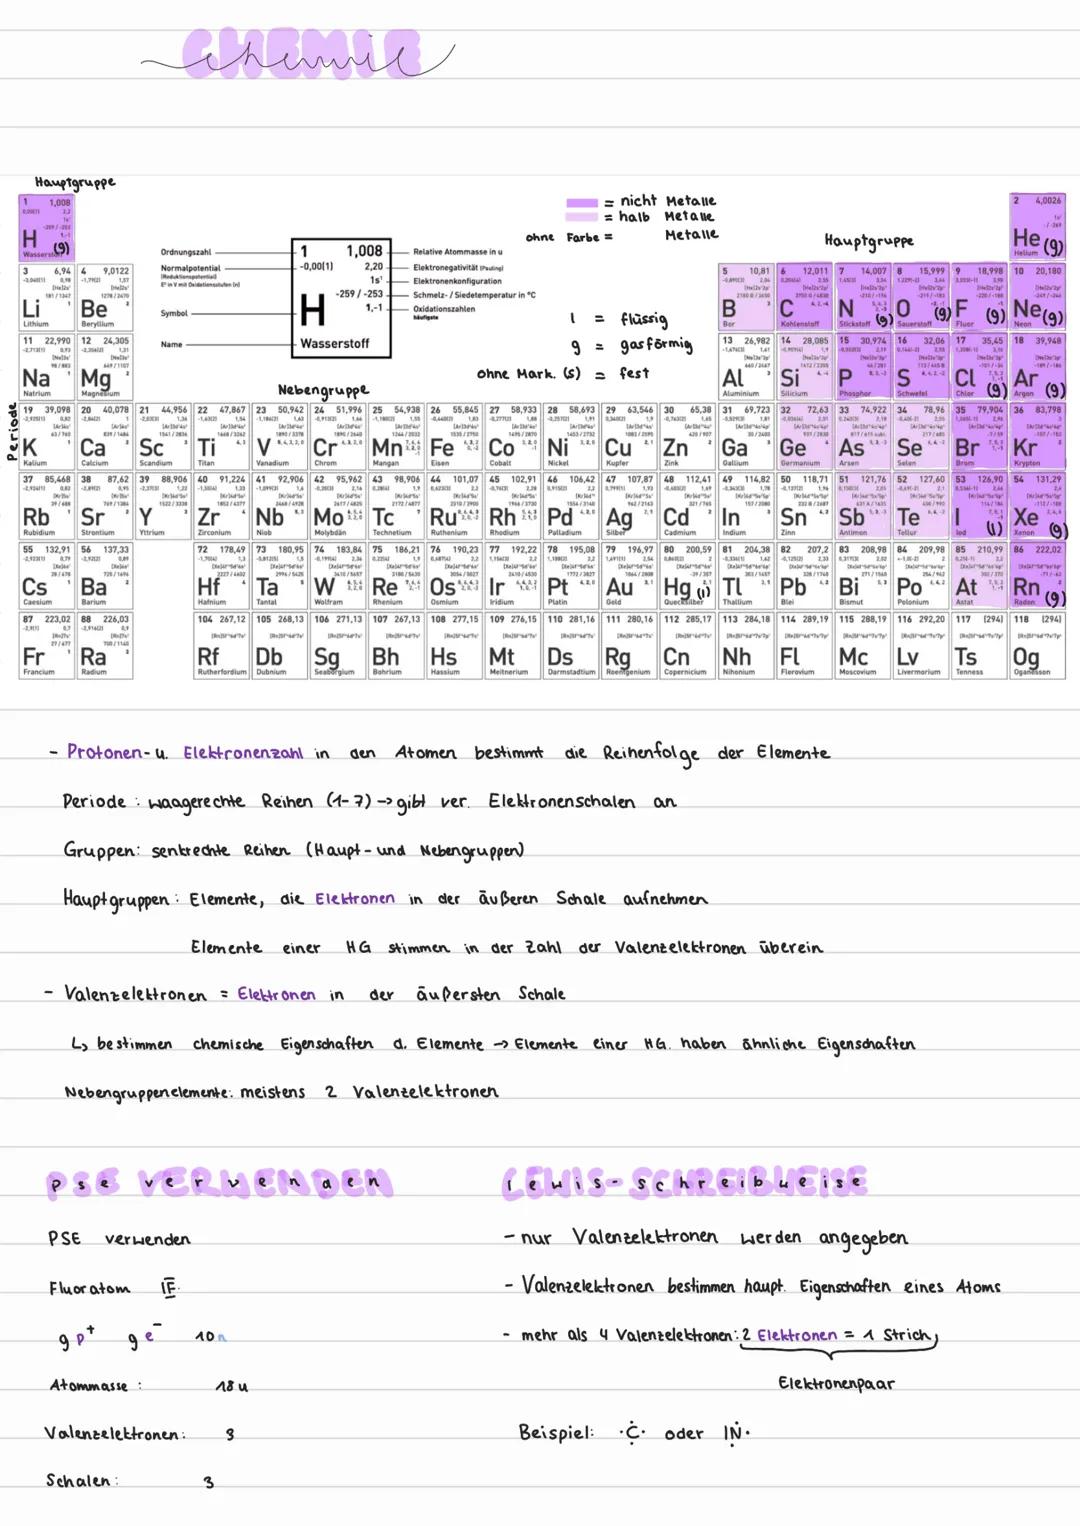 Hauptgruppe
1,008
H
Li
Lithium
(9)
6.94
Hel
11 22,990 12 24.305
a
Nell
IN
18/803
Na Mg
Natrium
Kalium
37 85,468
0.83
Cs
Caesium
Rb
Rubidium
